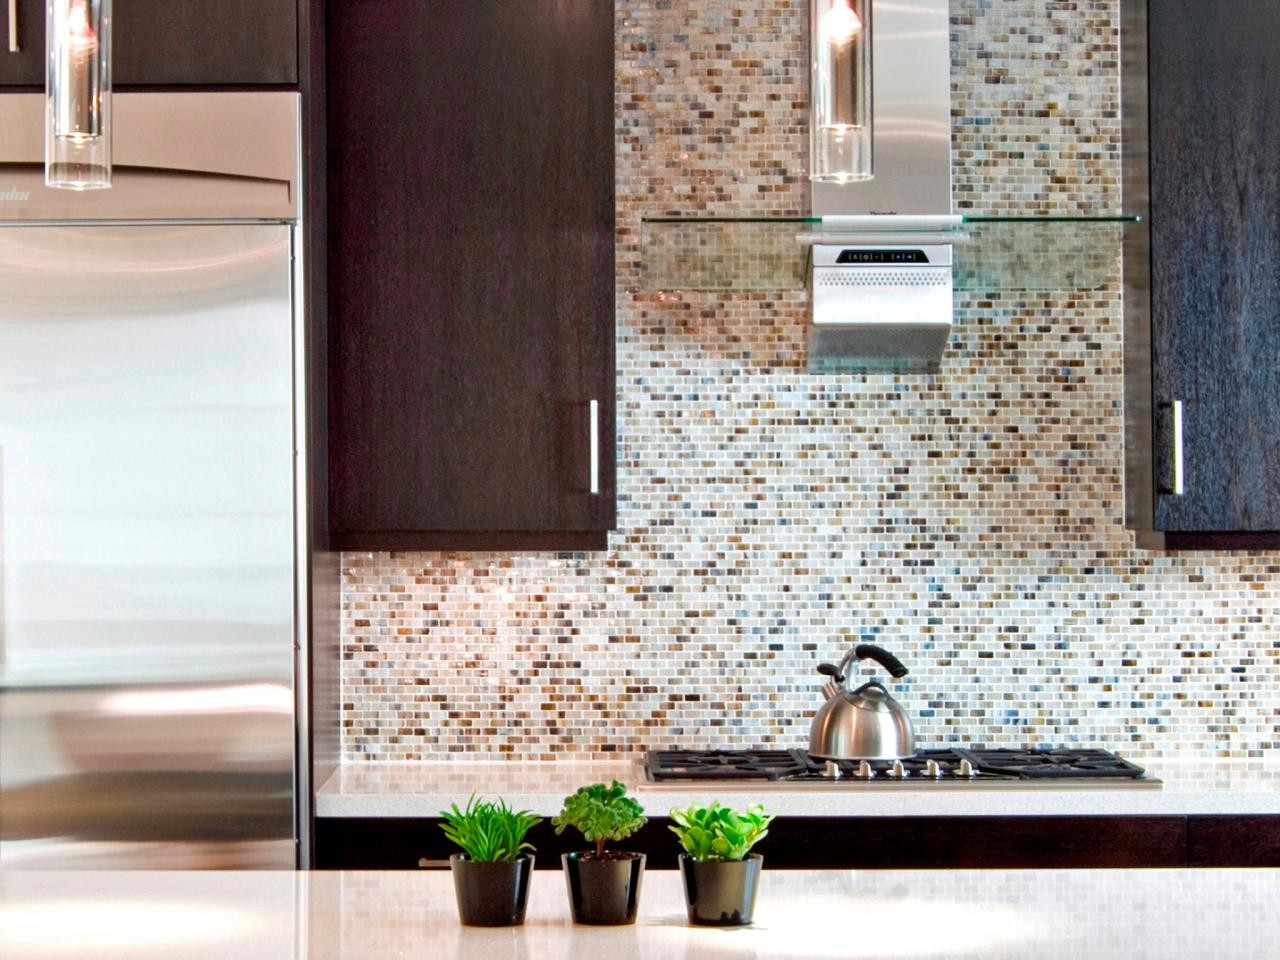 Kitchen Backsplash Tiles Designs
 Everything That You Should Know about Kitchen Backsplash